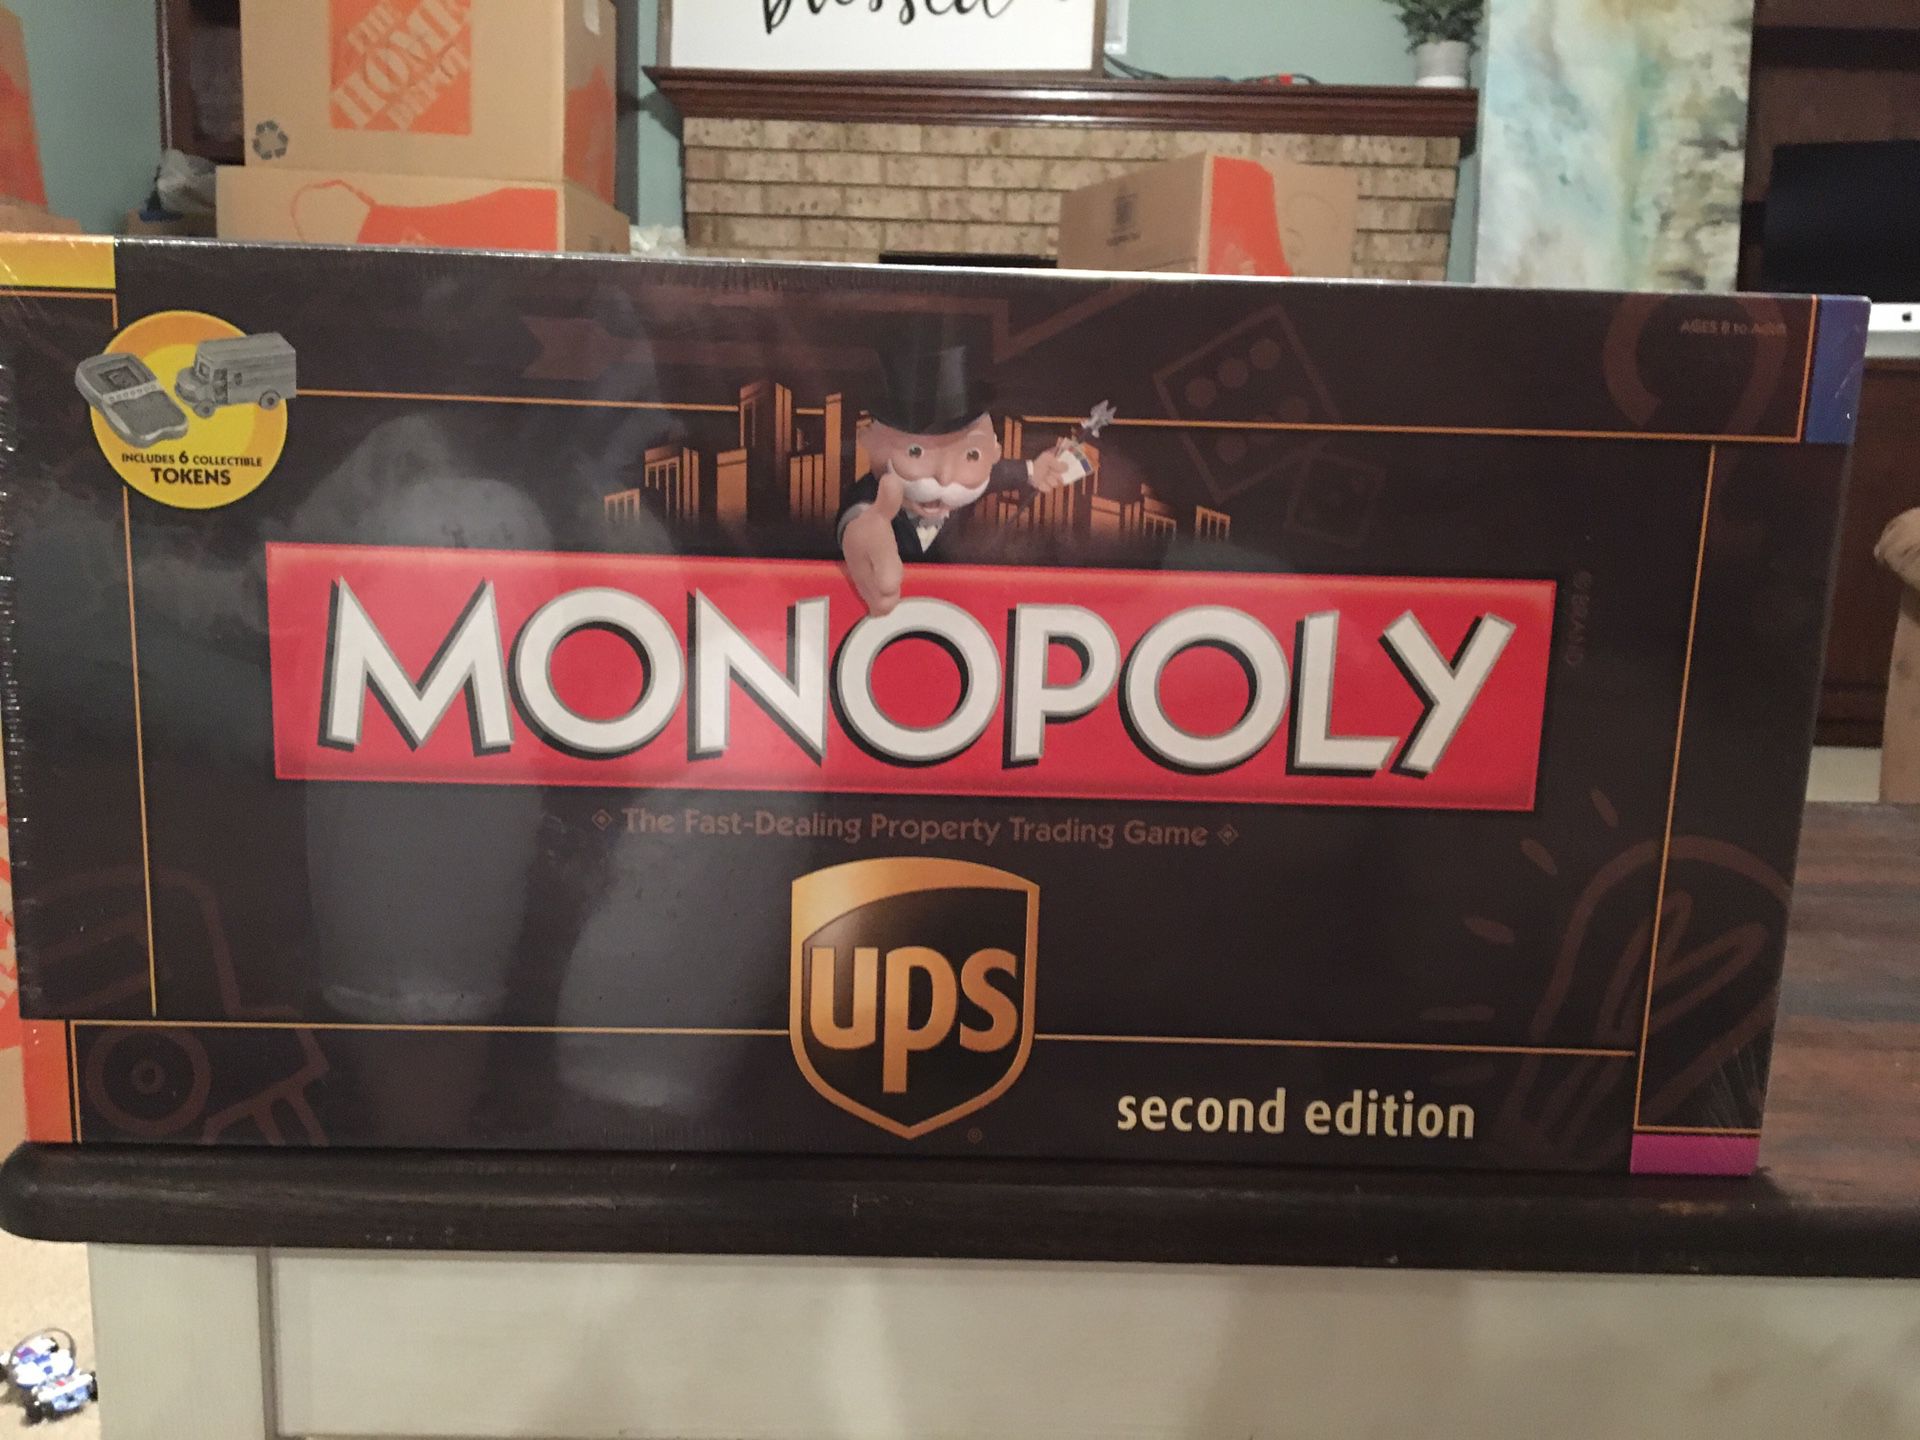 Monopoly UPS edition.